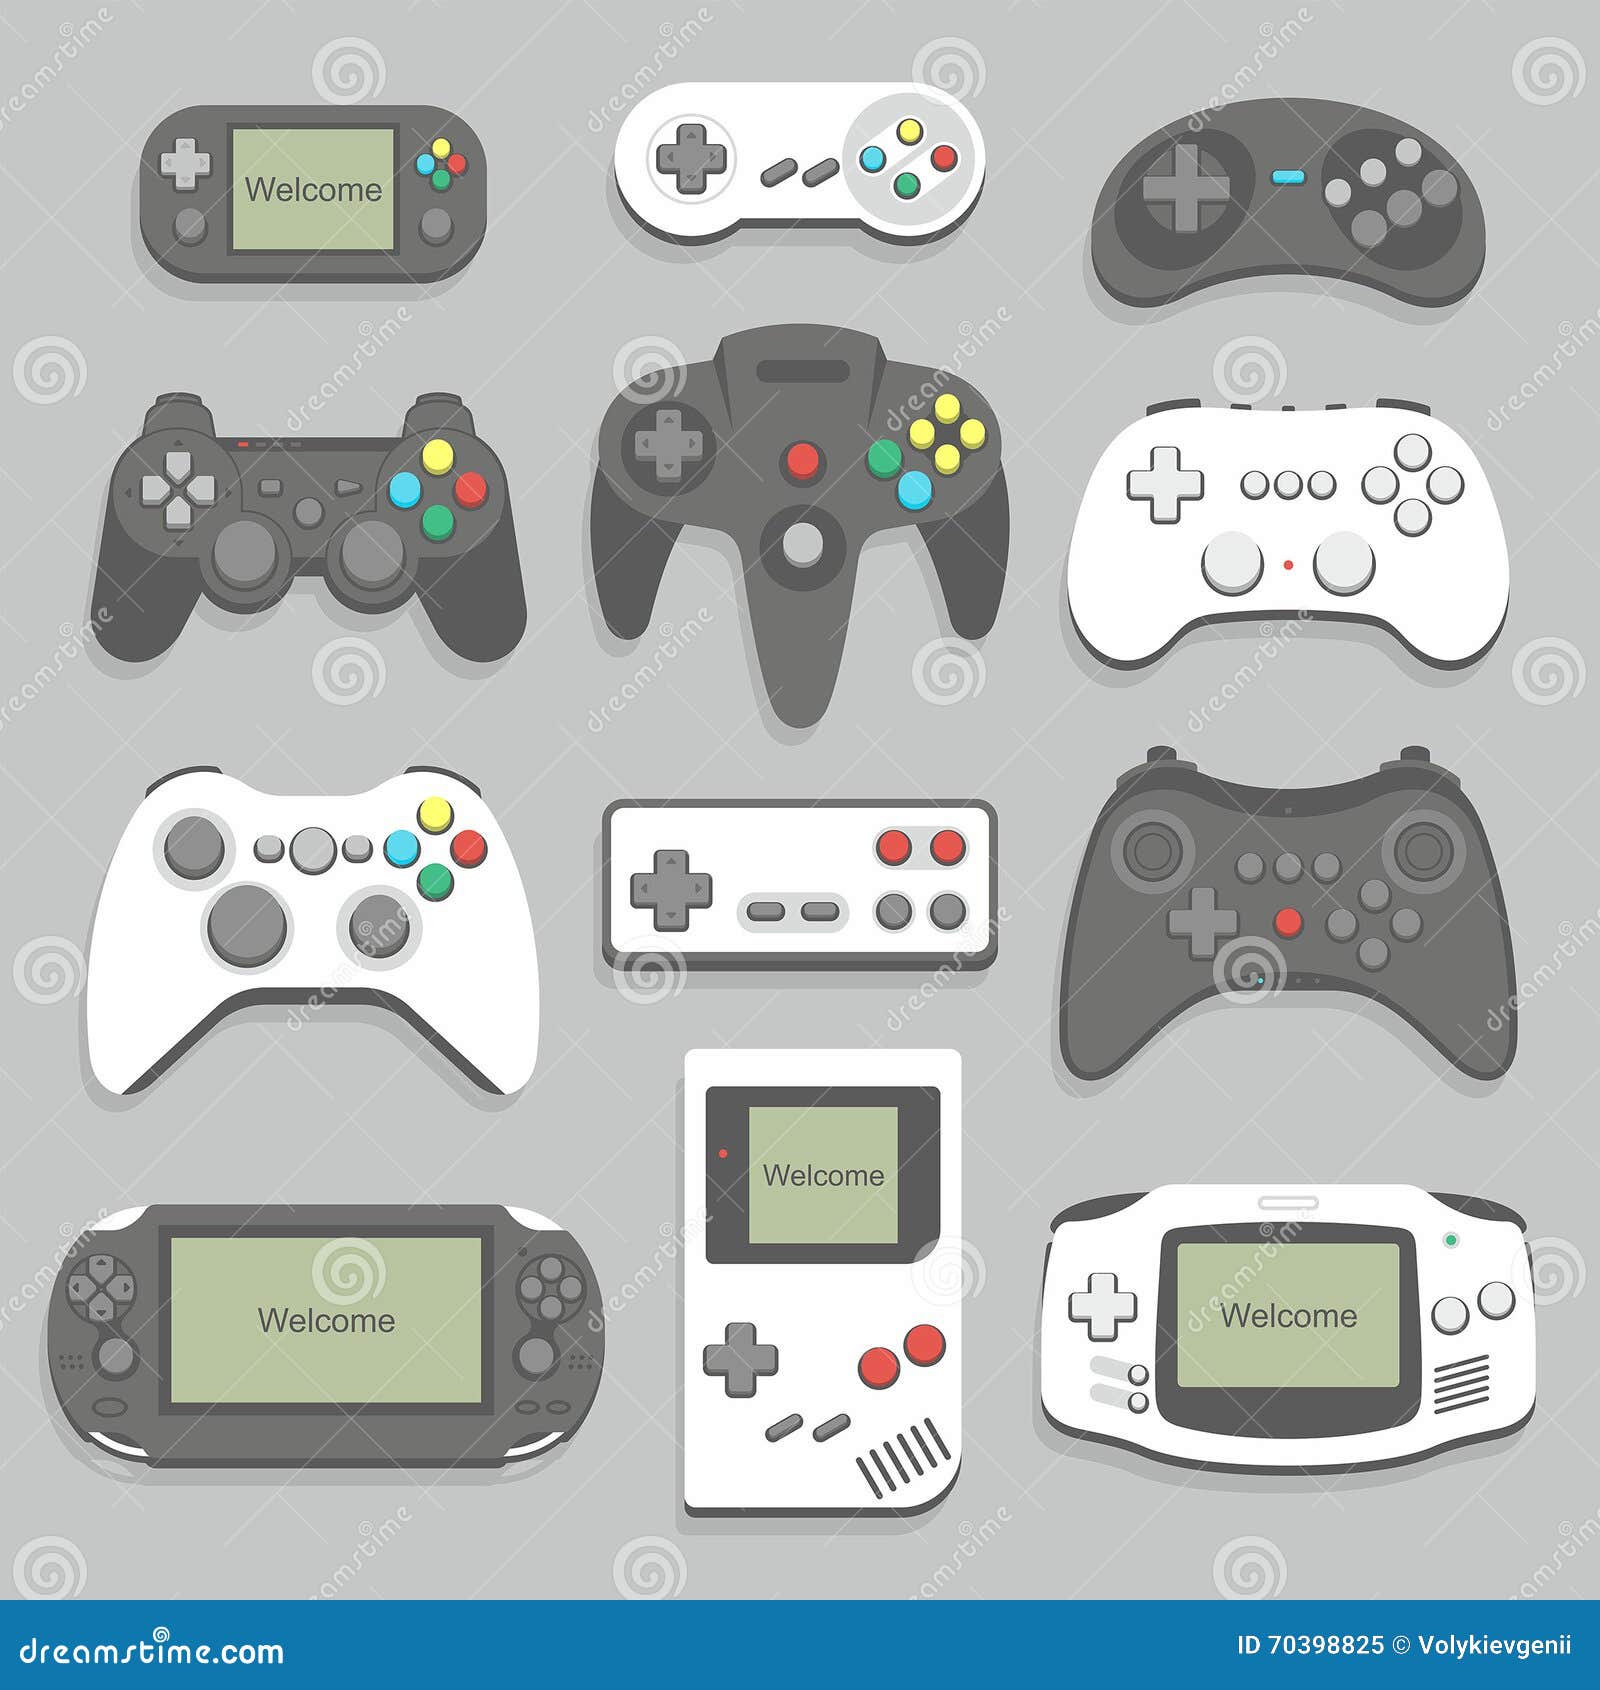 gamepad icon set